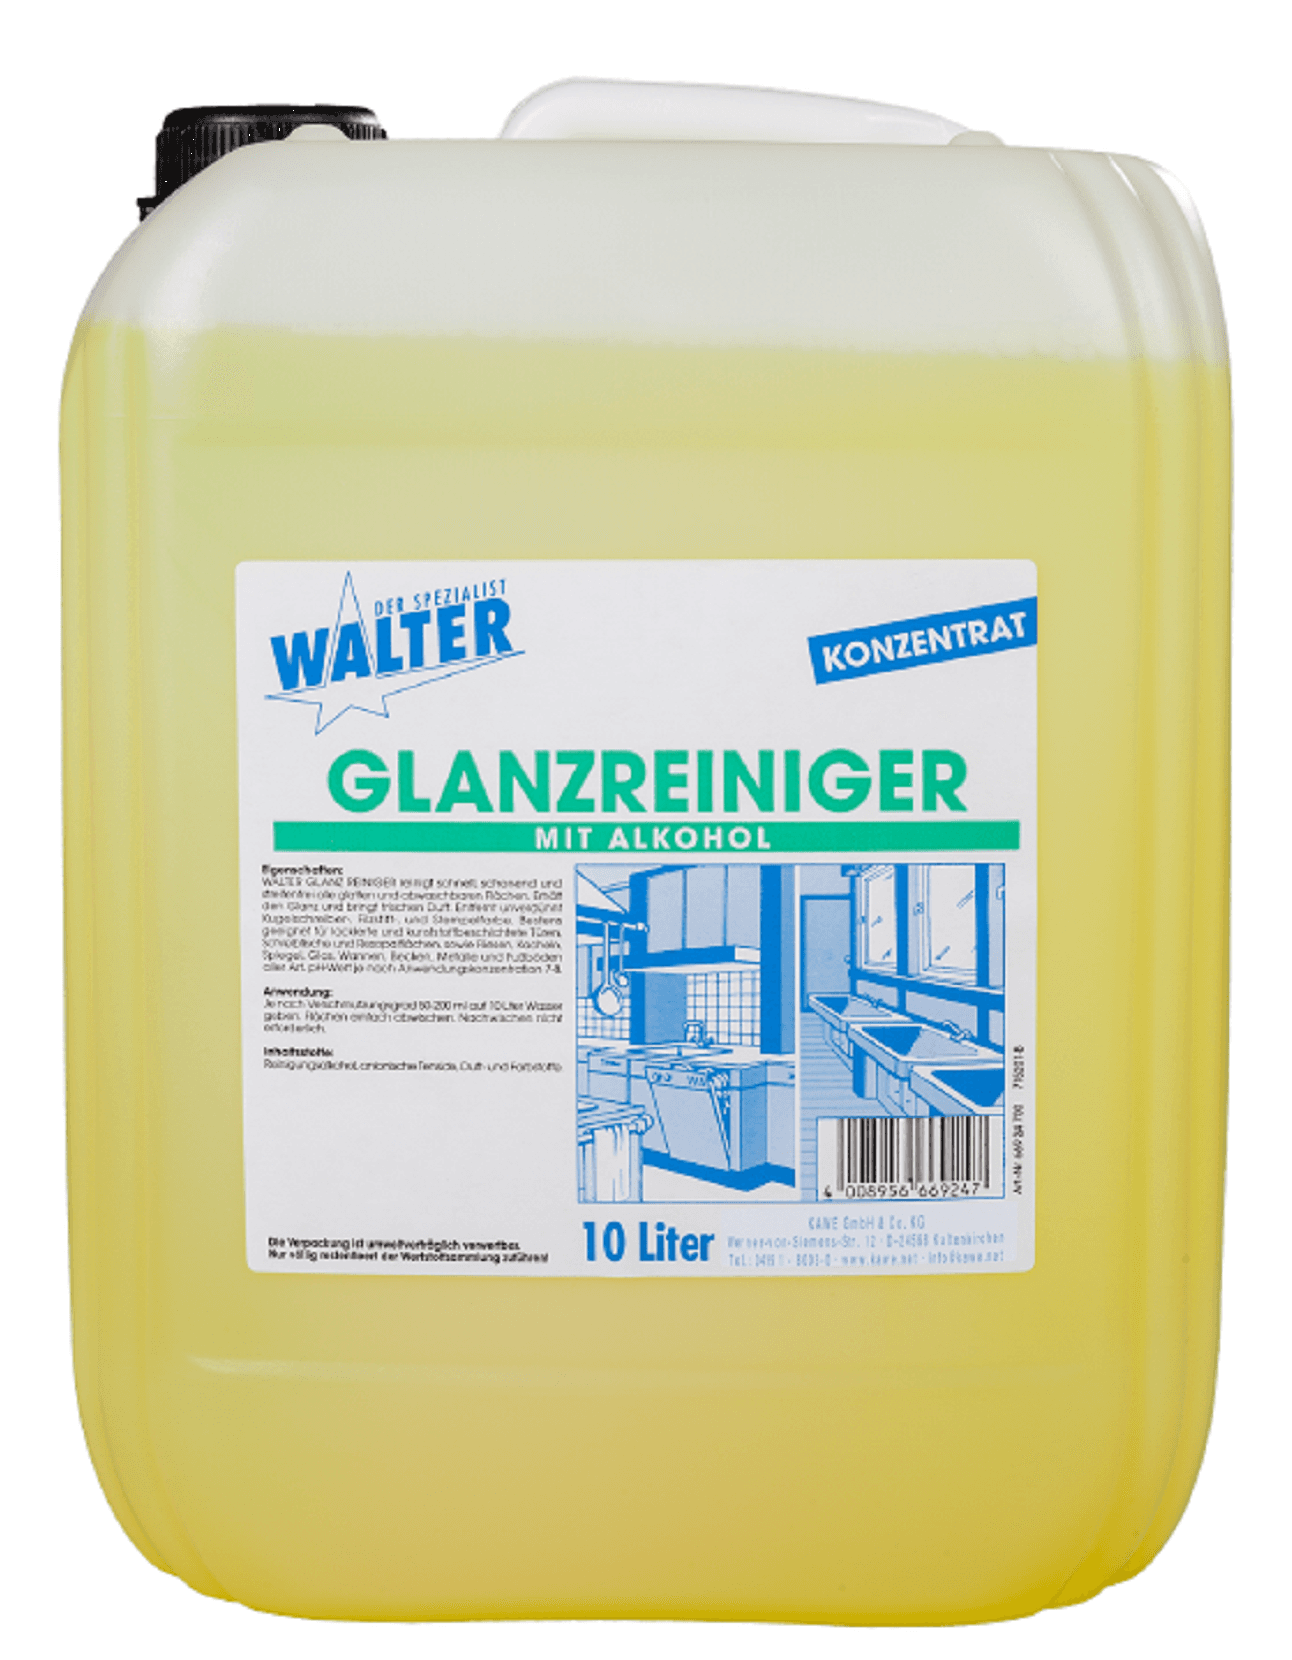 Product Walter Glanzreiniger – KAWE GmbH & Co. KG image